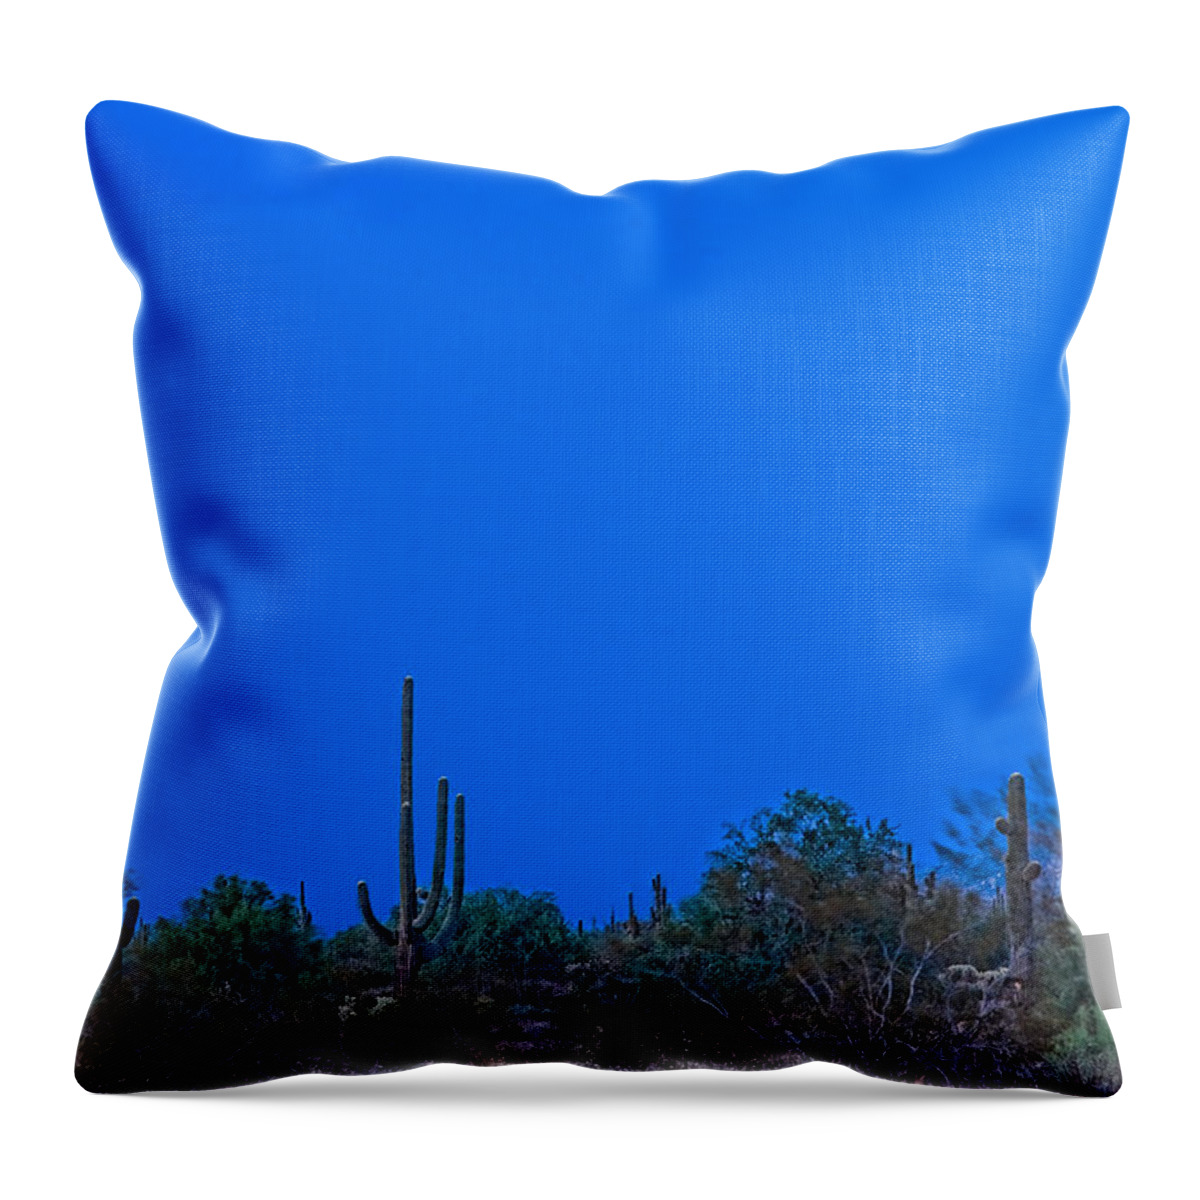 Arizona Throw Pillow featuring the photograph Arizona Desert Landscape by James BO Insogna